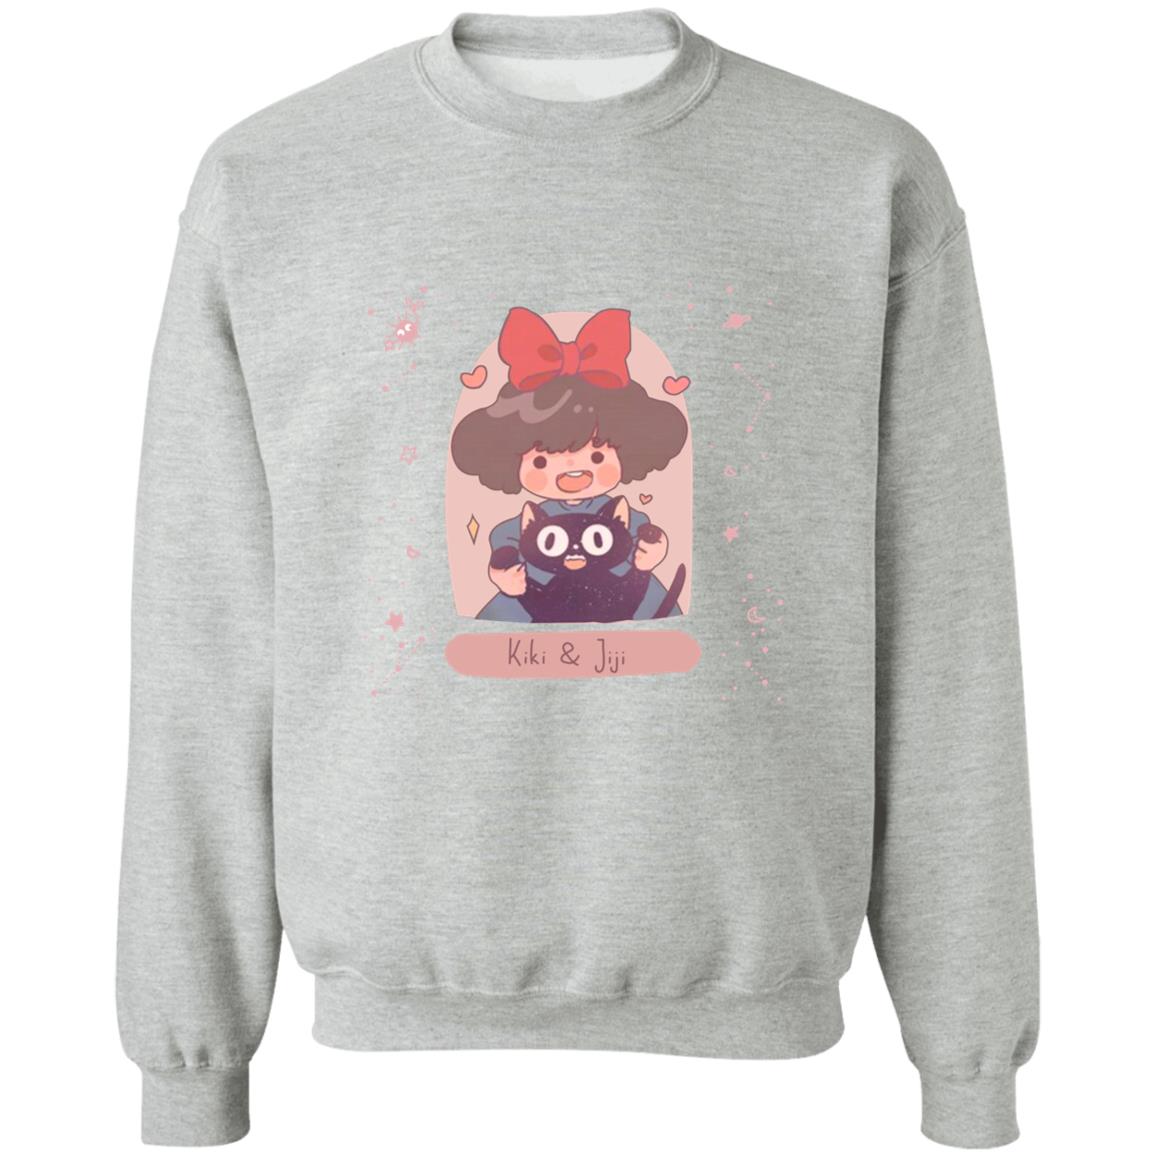 Kiki and Jiji cute Fanart Sweatshirt